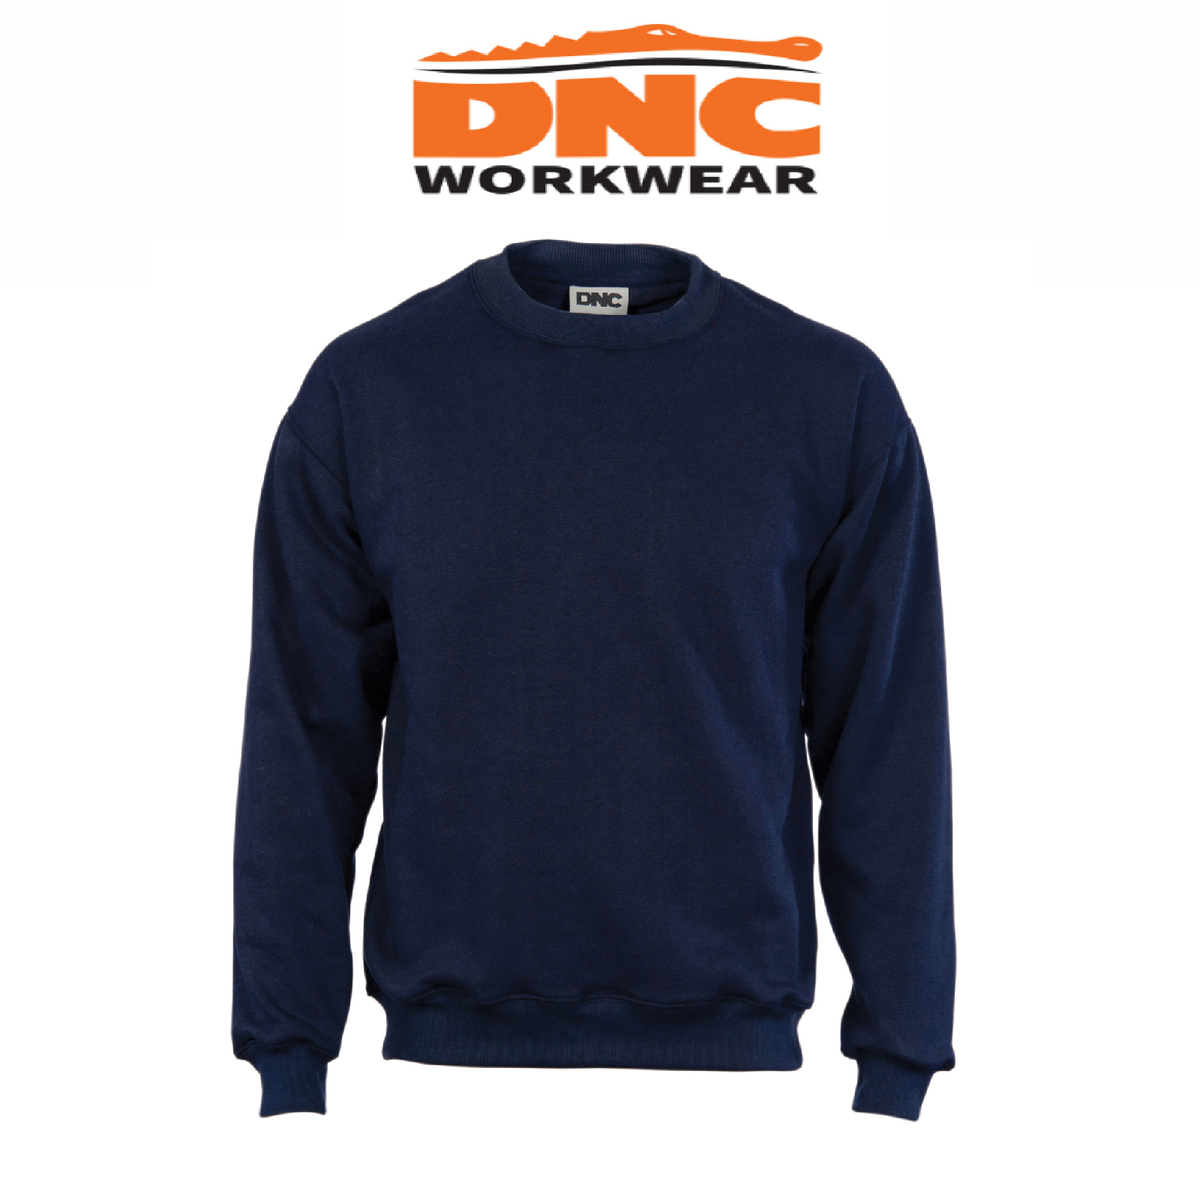 DNC Workwear Mens Crew Neck Fleecy Sweatshirt Sloppy Joe Winter Comfy Work 5302